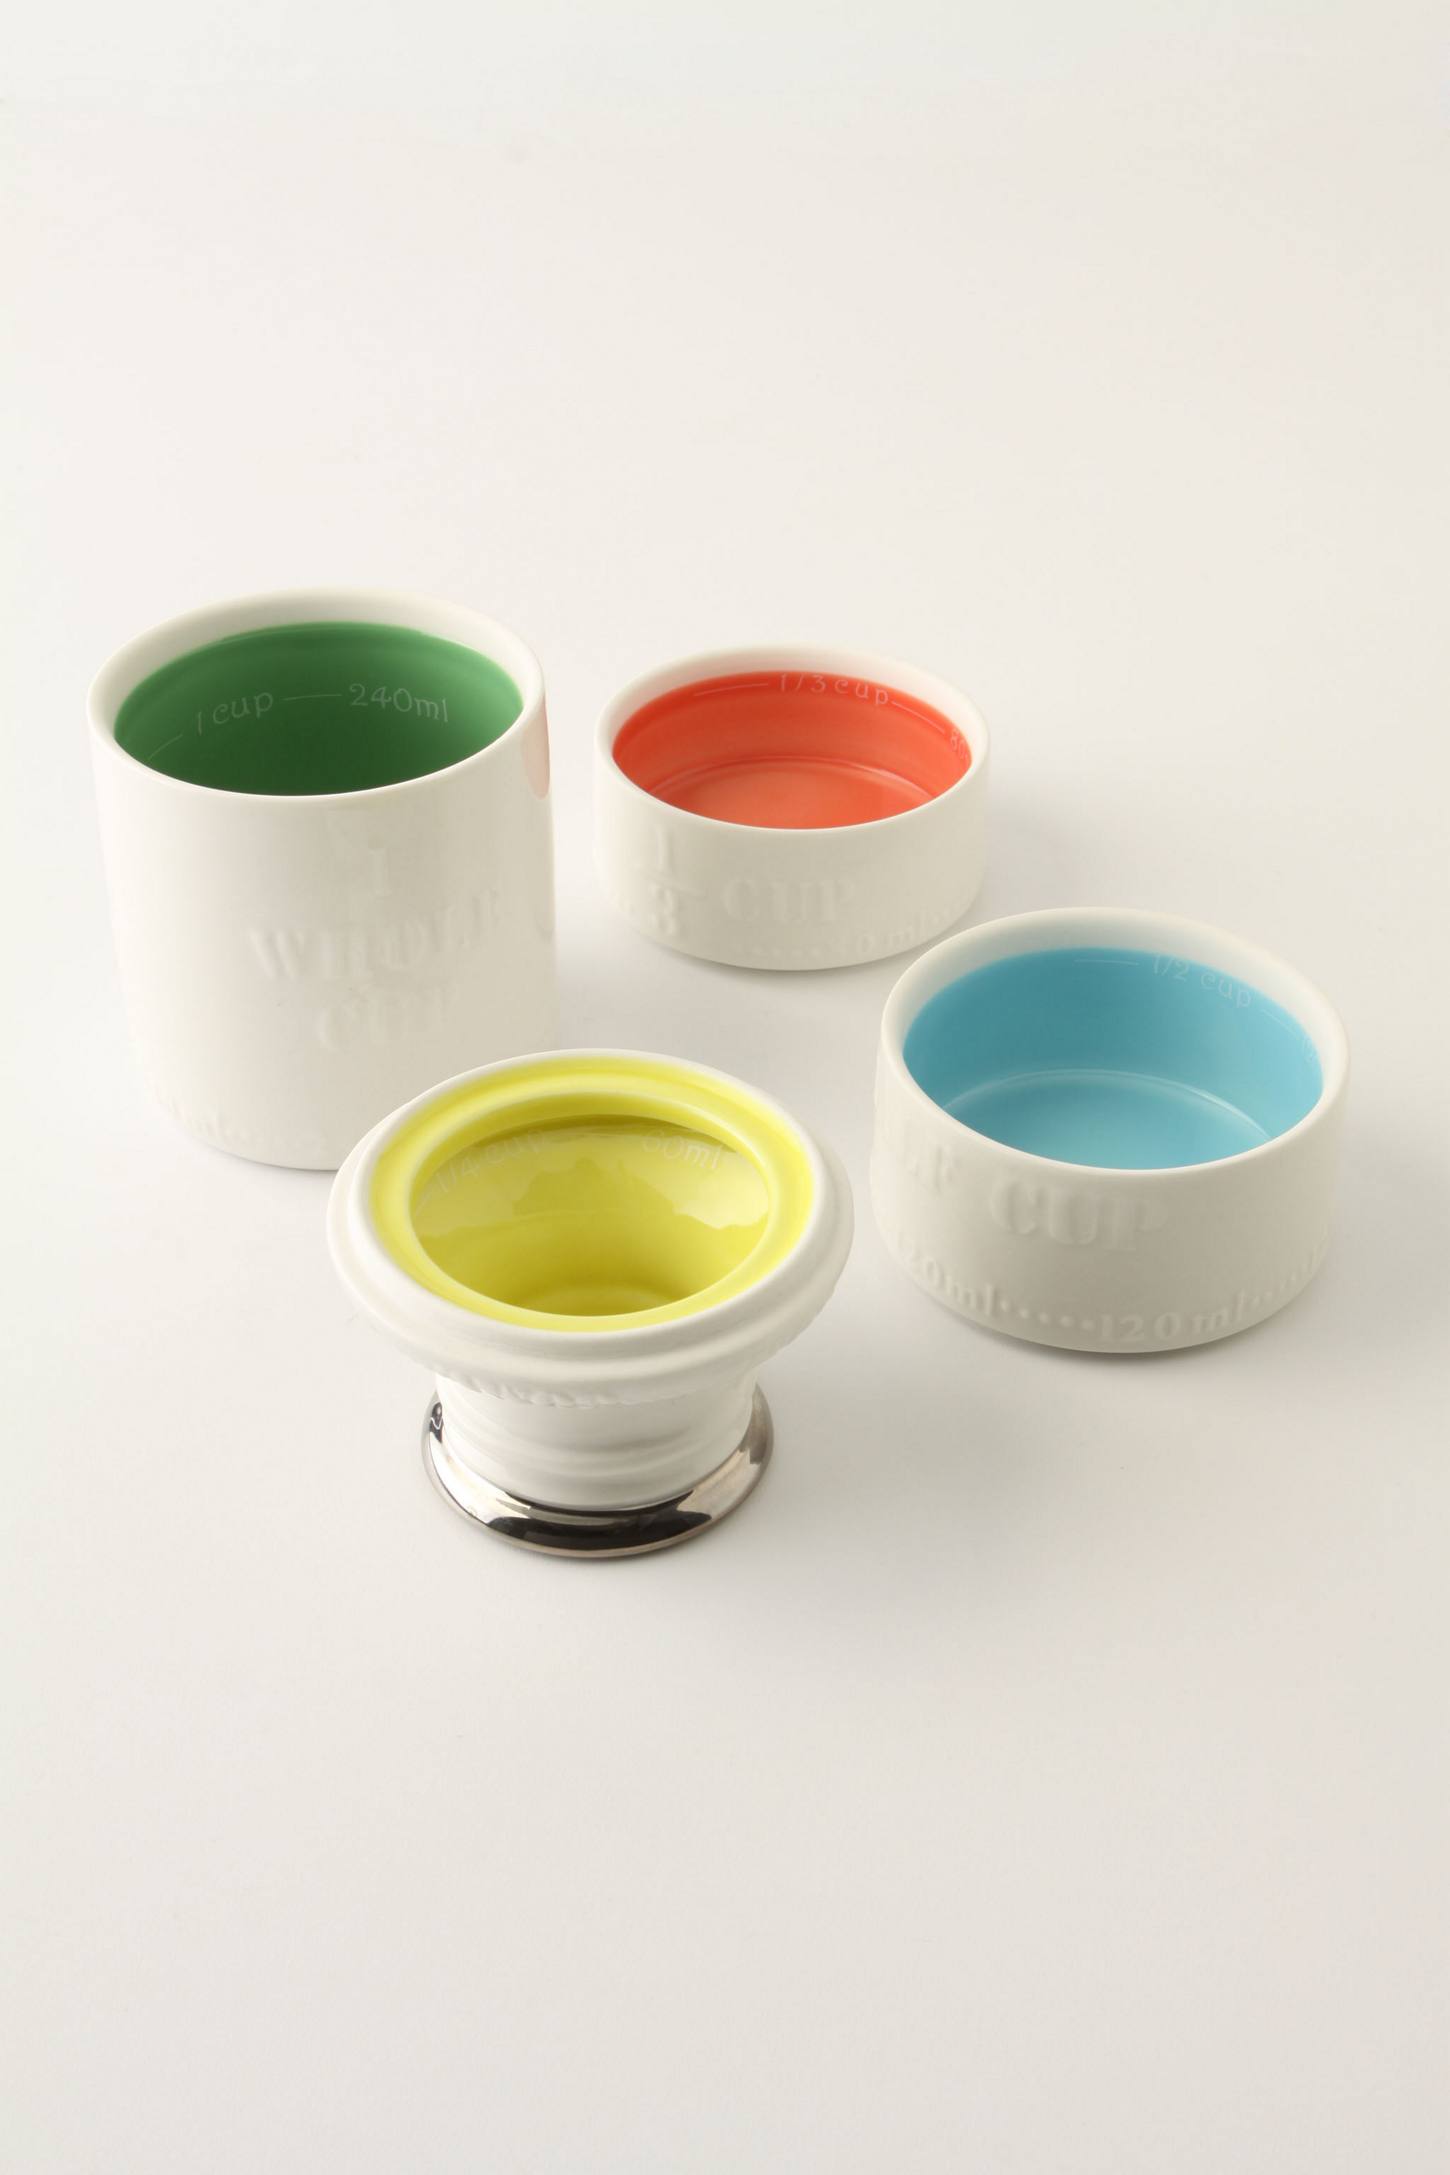 Milk carton measuring cups with colors inside